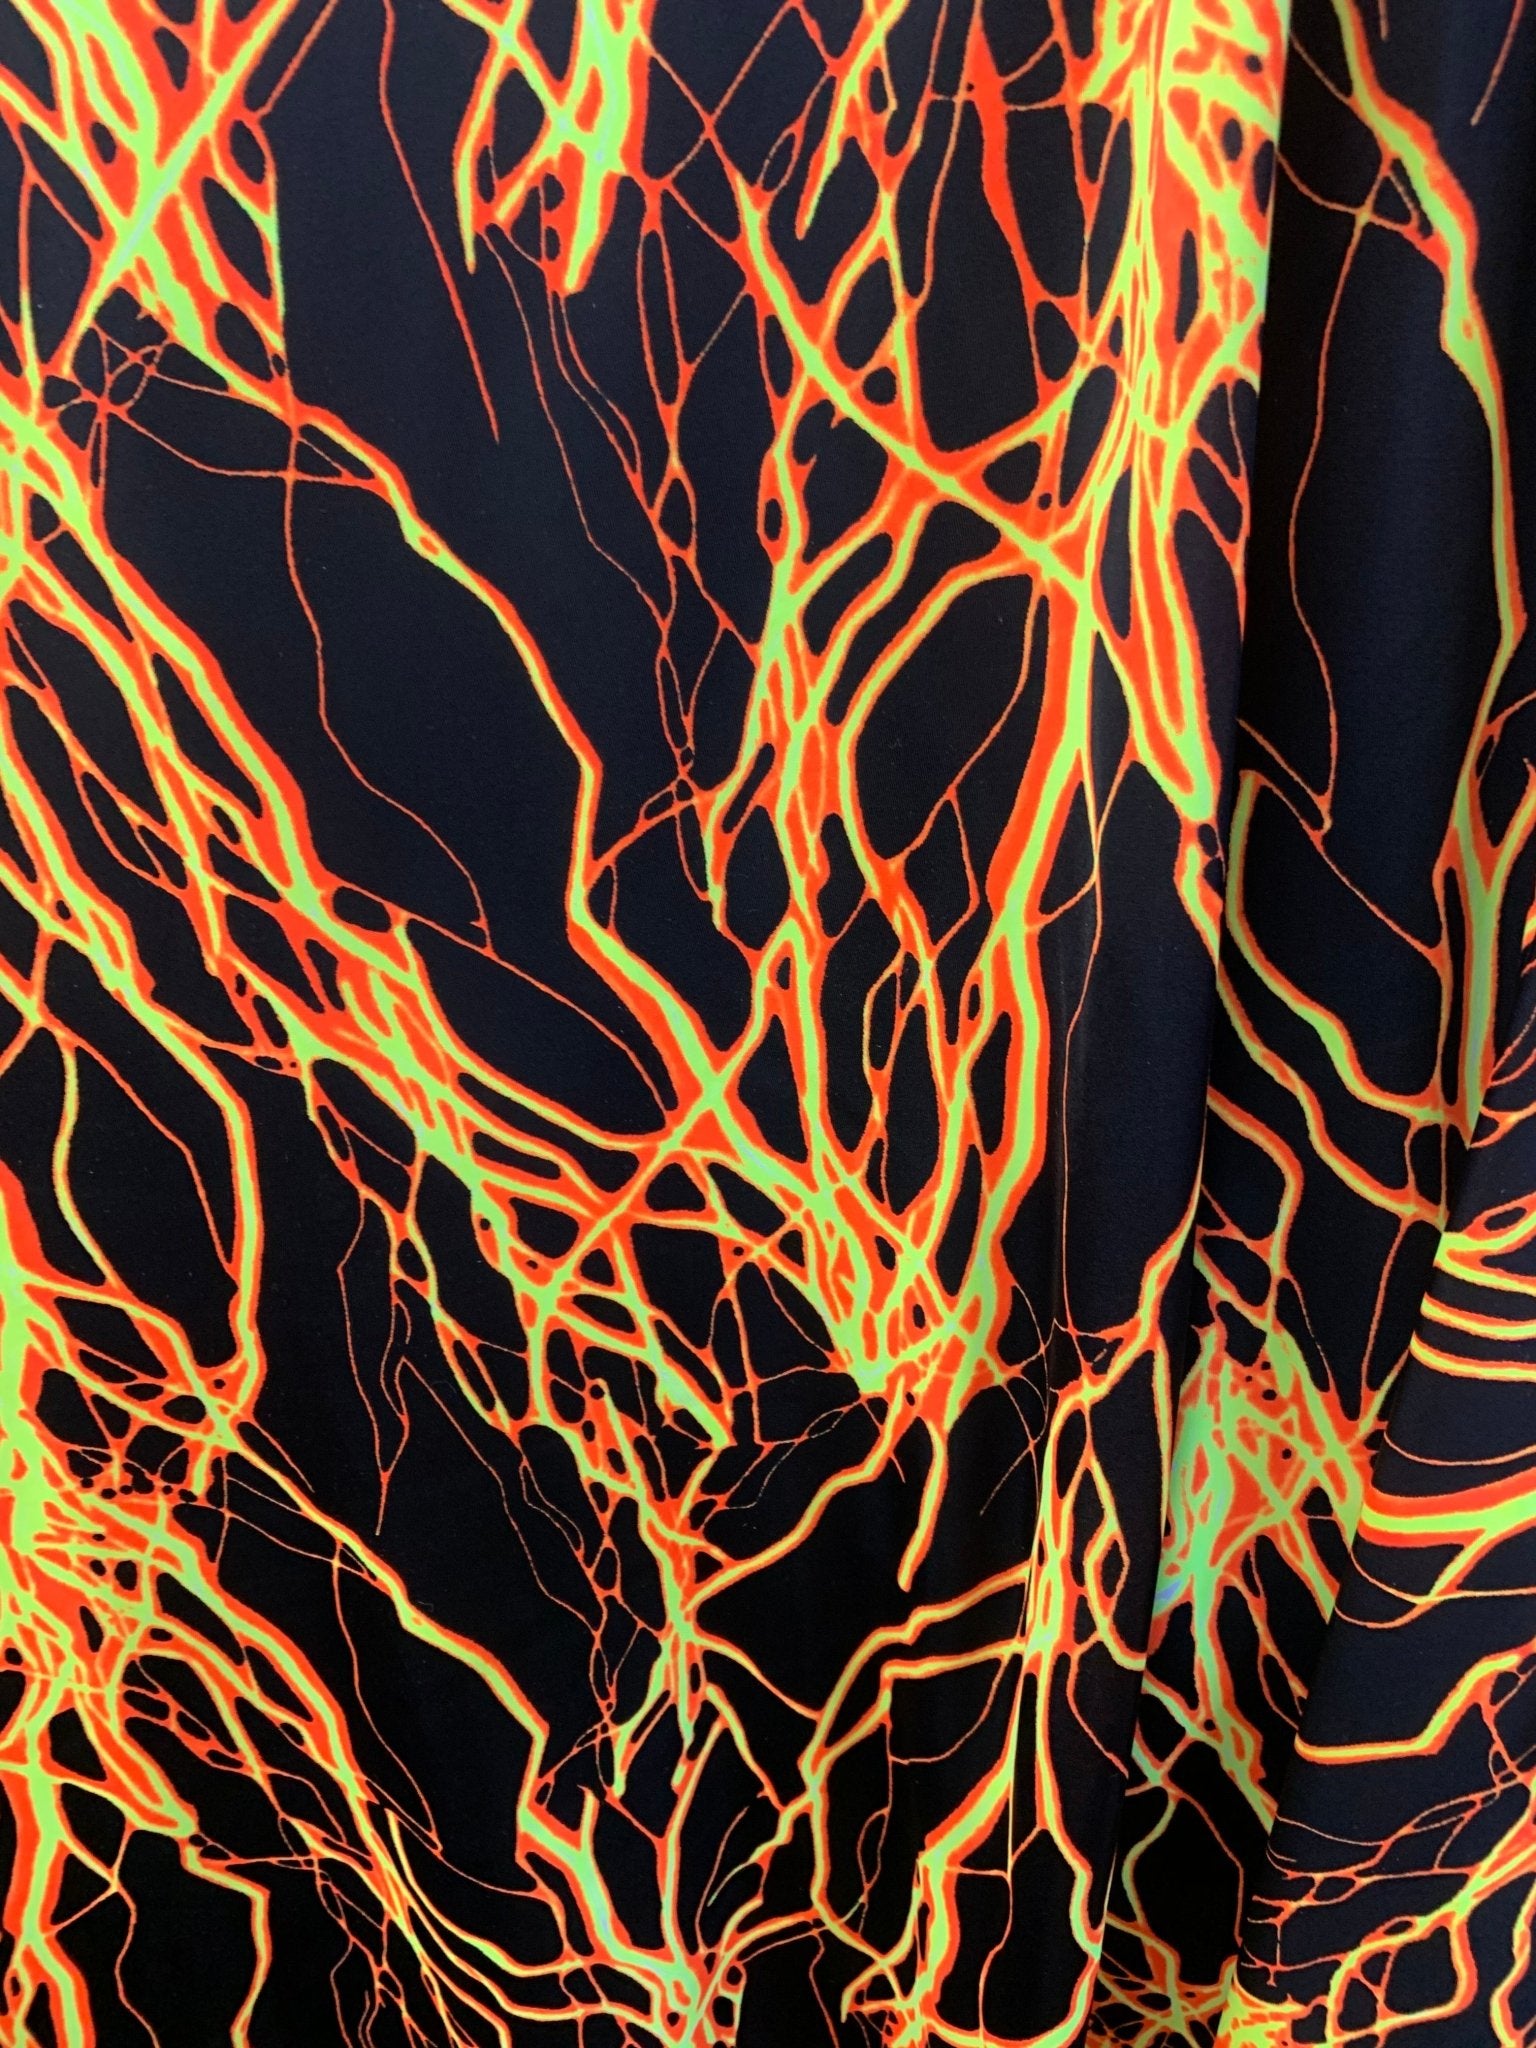 Lighting Bolt Orange/Black Nylon Spandex Fabric By The YardSpandex FabricICEFABRICICE FABRICSLighting Bolt Orange/Black Nylon Spandex Fabric By The Yard ICEFABRIC